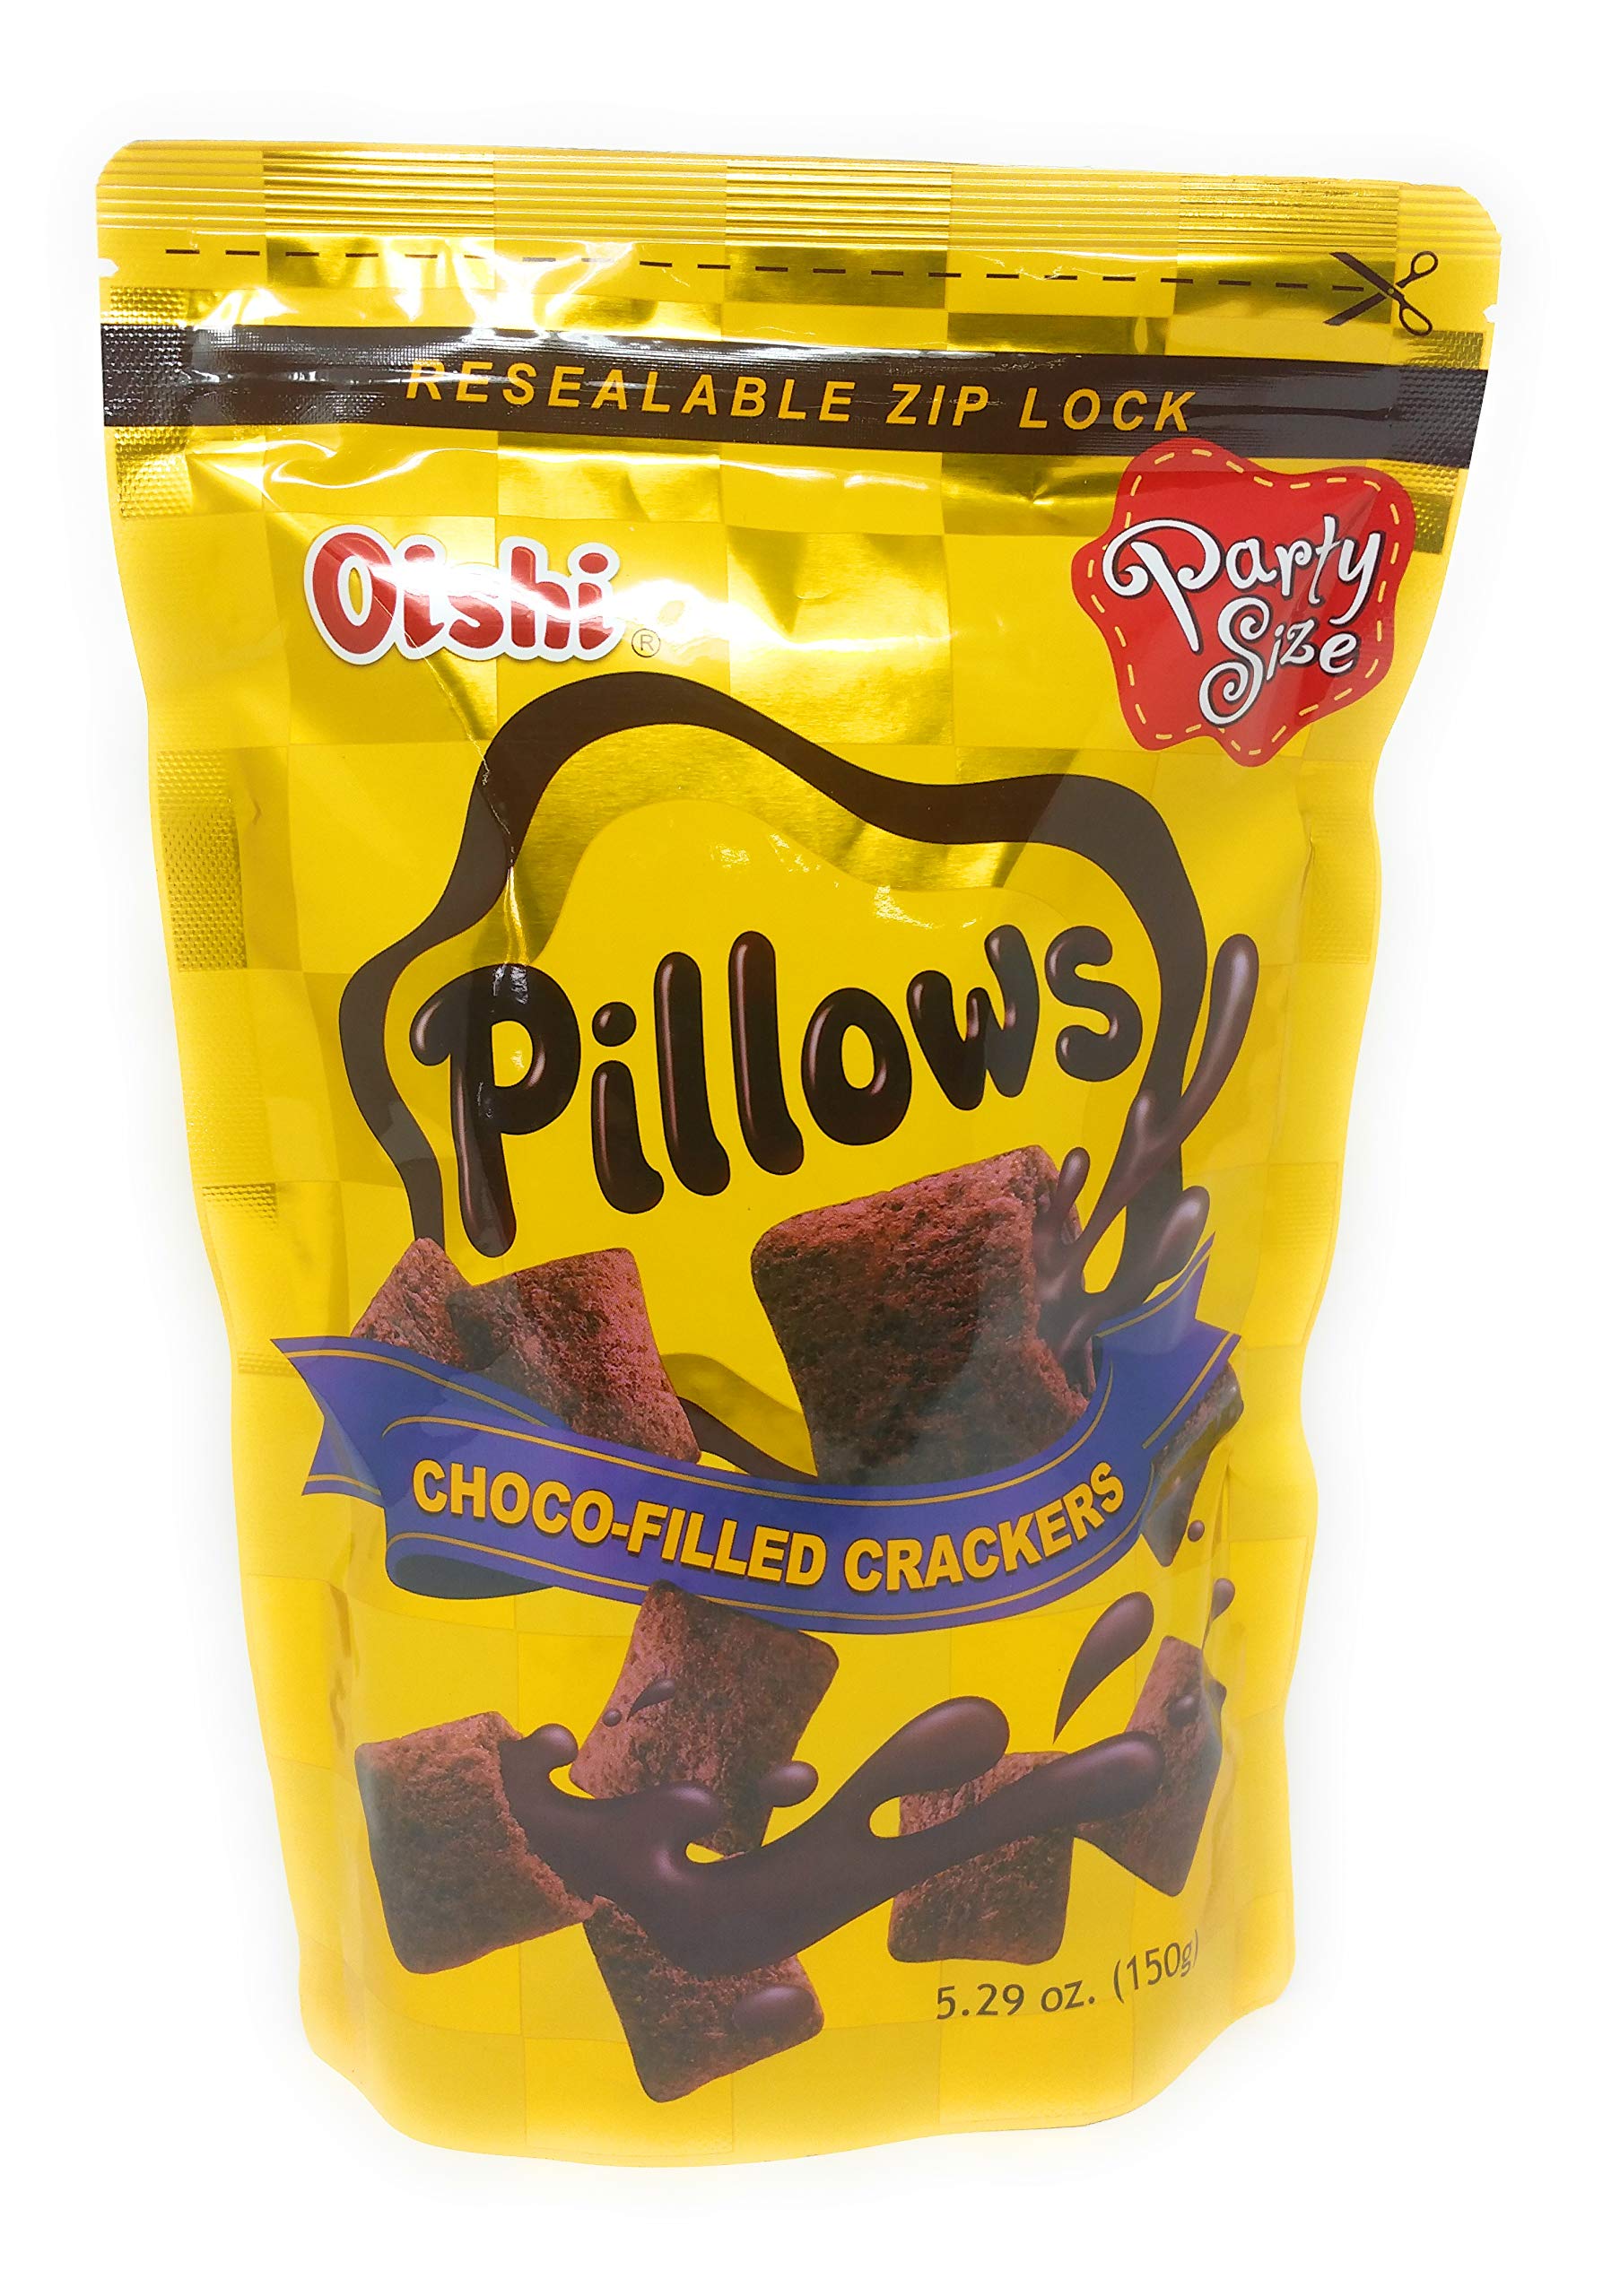 Oishi - Pillows, Choco-filled Crackers, 5.29oz (150g)